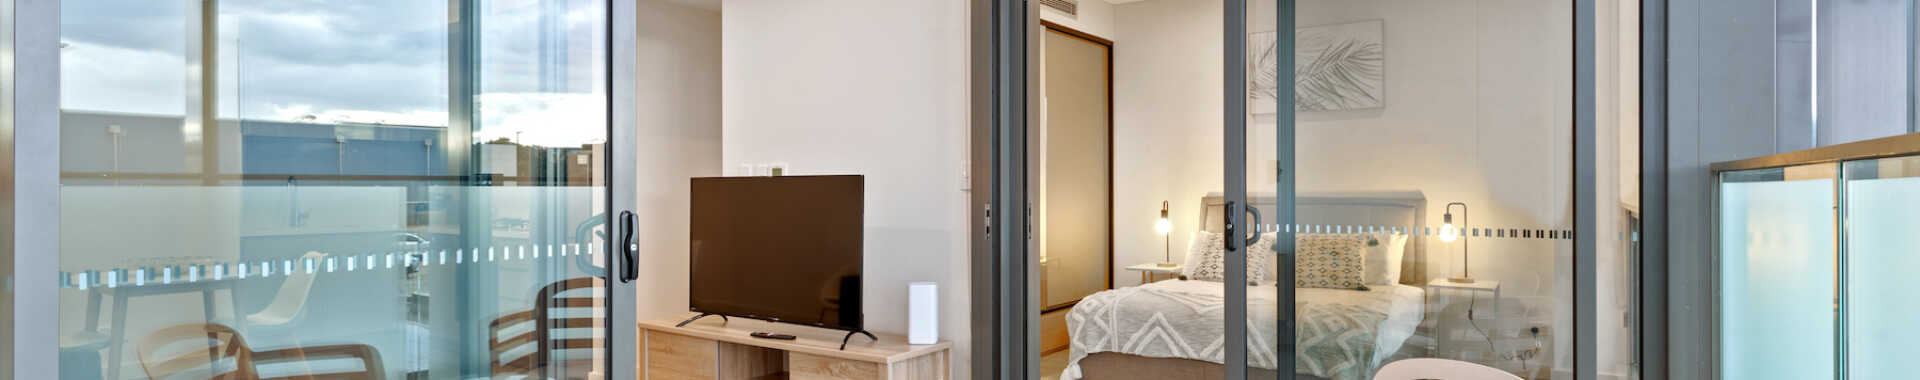 Astra Apartments Macquarie Park - 1 bedroom corporate apartment